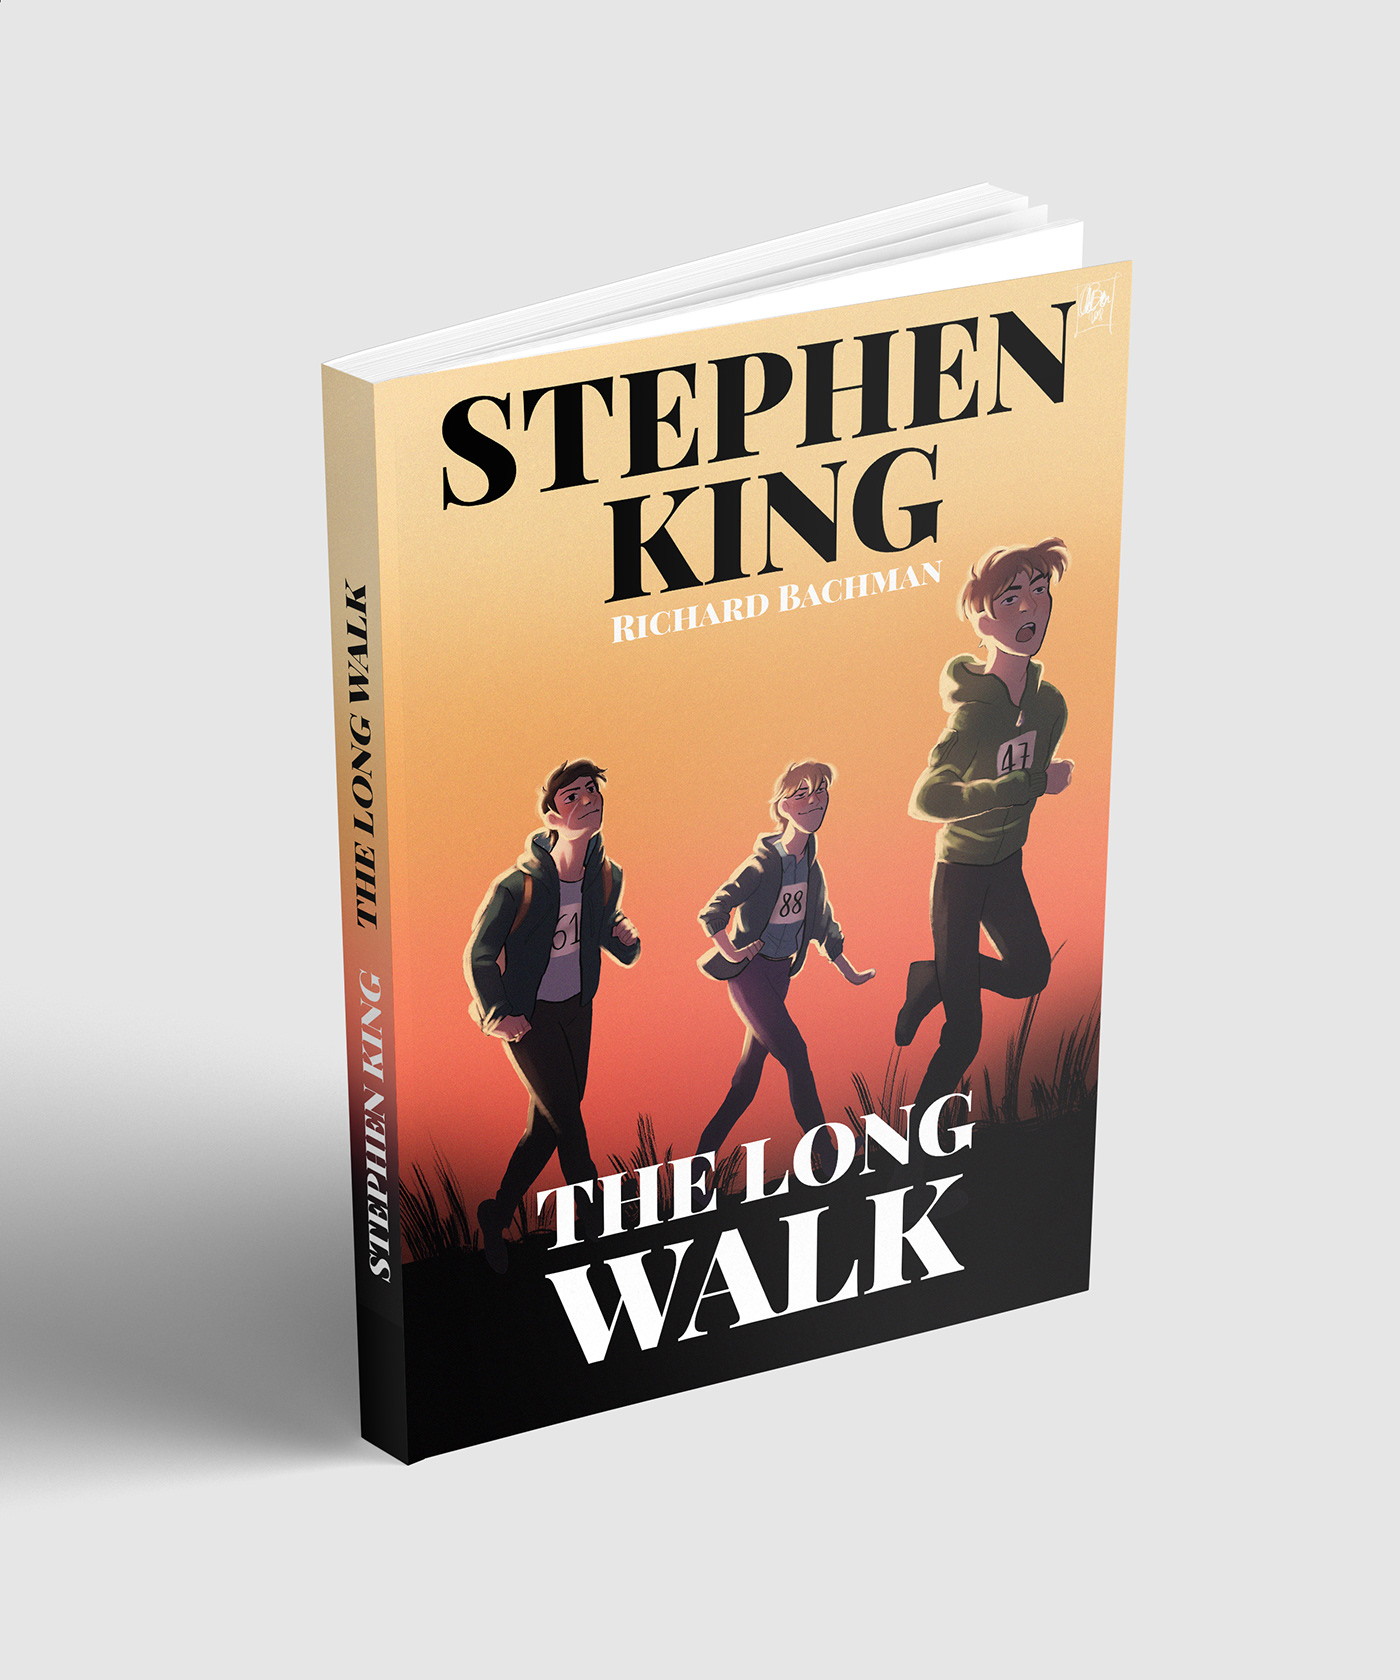 book cover Stephen King the long walk la lunga marcia ray garraty peter mcvries richard bachman alice berti